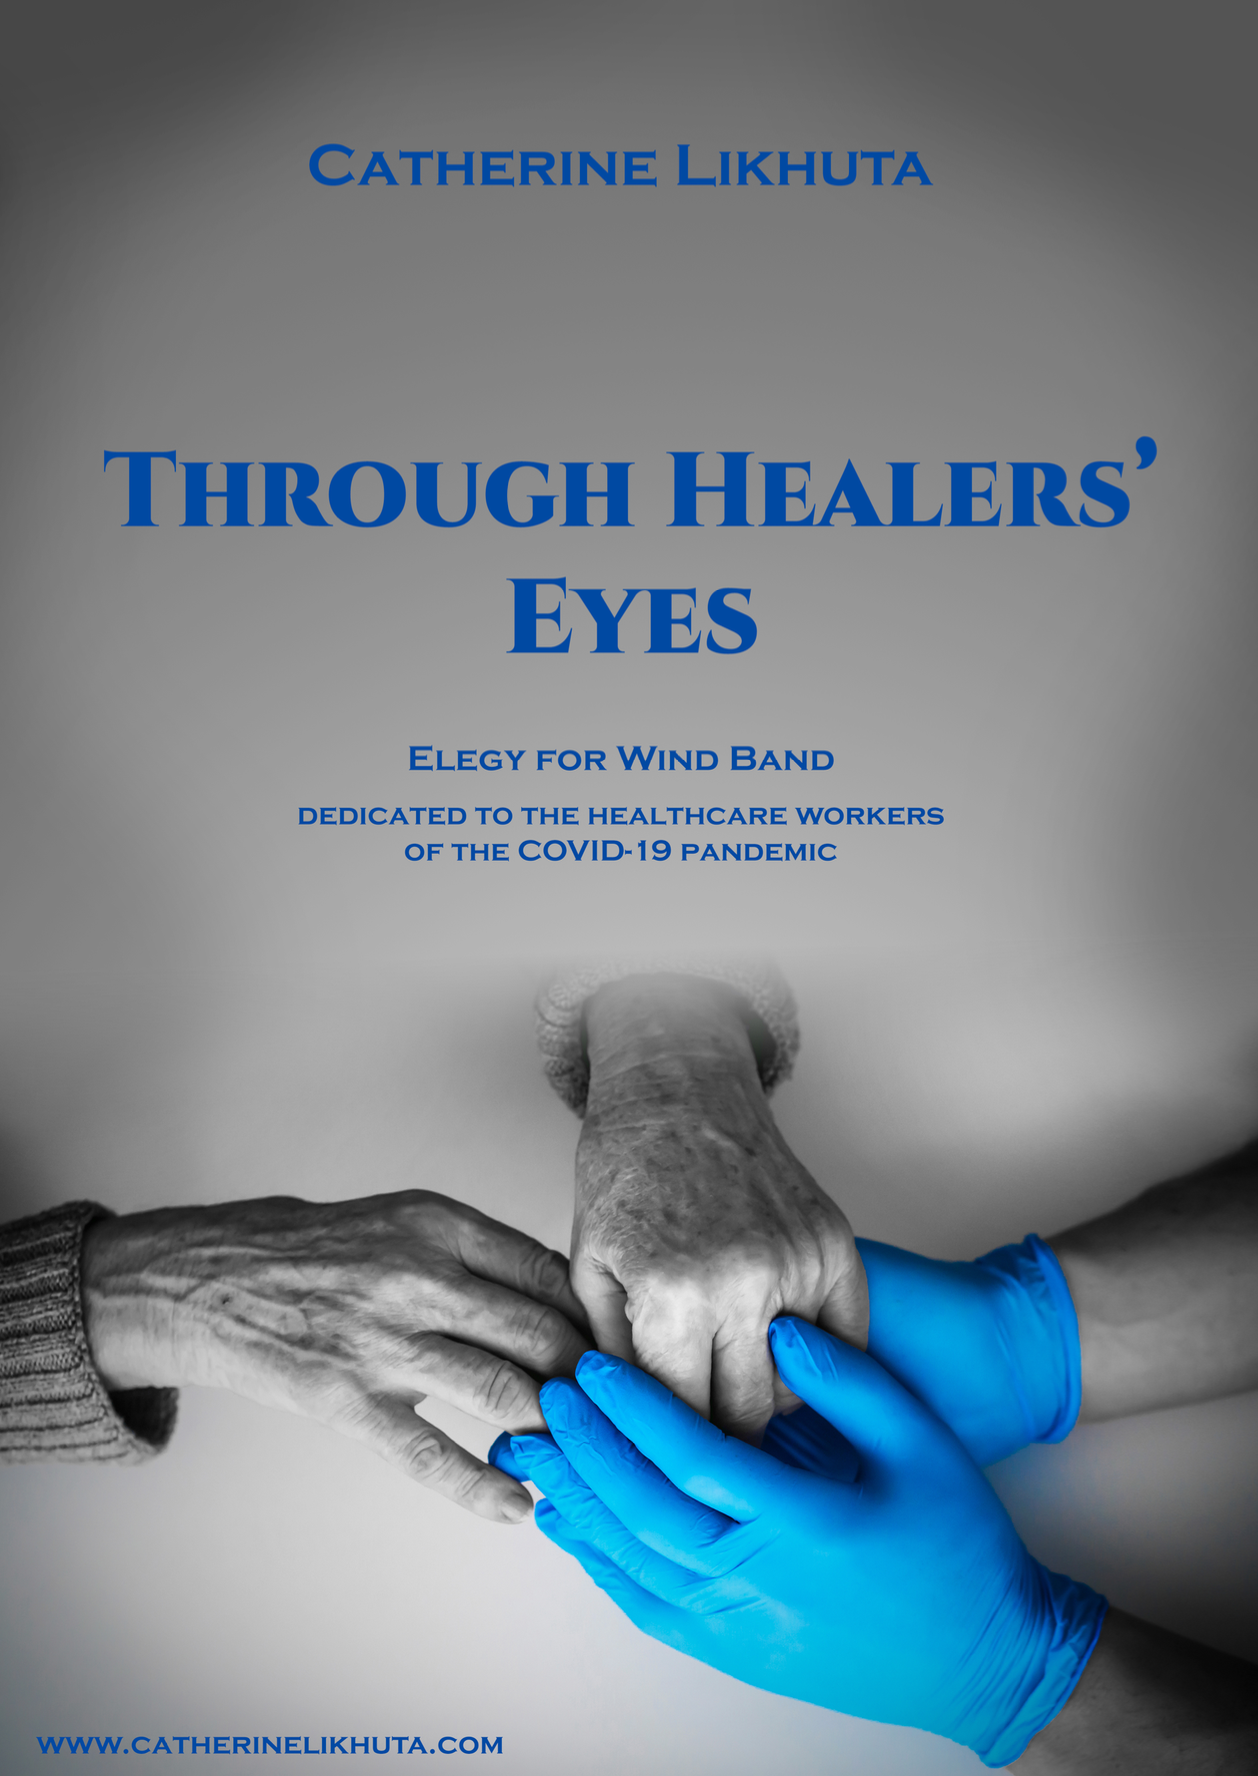 Through Healer's Eyes by Cathy Likhuta